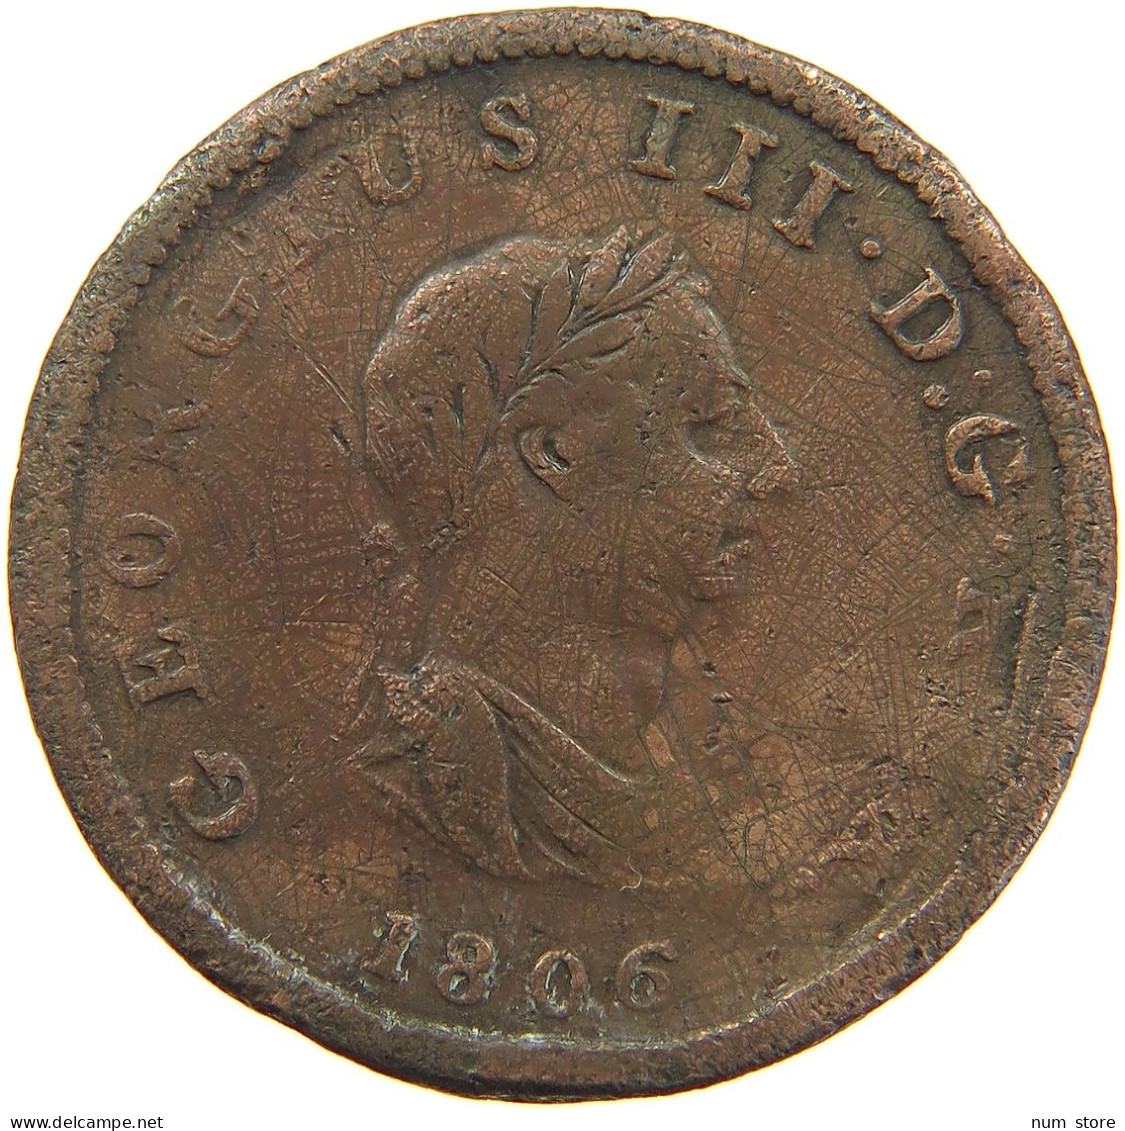 GREAT BRITAIN HALFPENNY 1806 GEORGE III. 1760-1820 #a084 0207 - B. 1/2 Penny